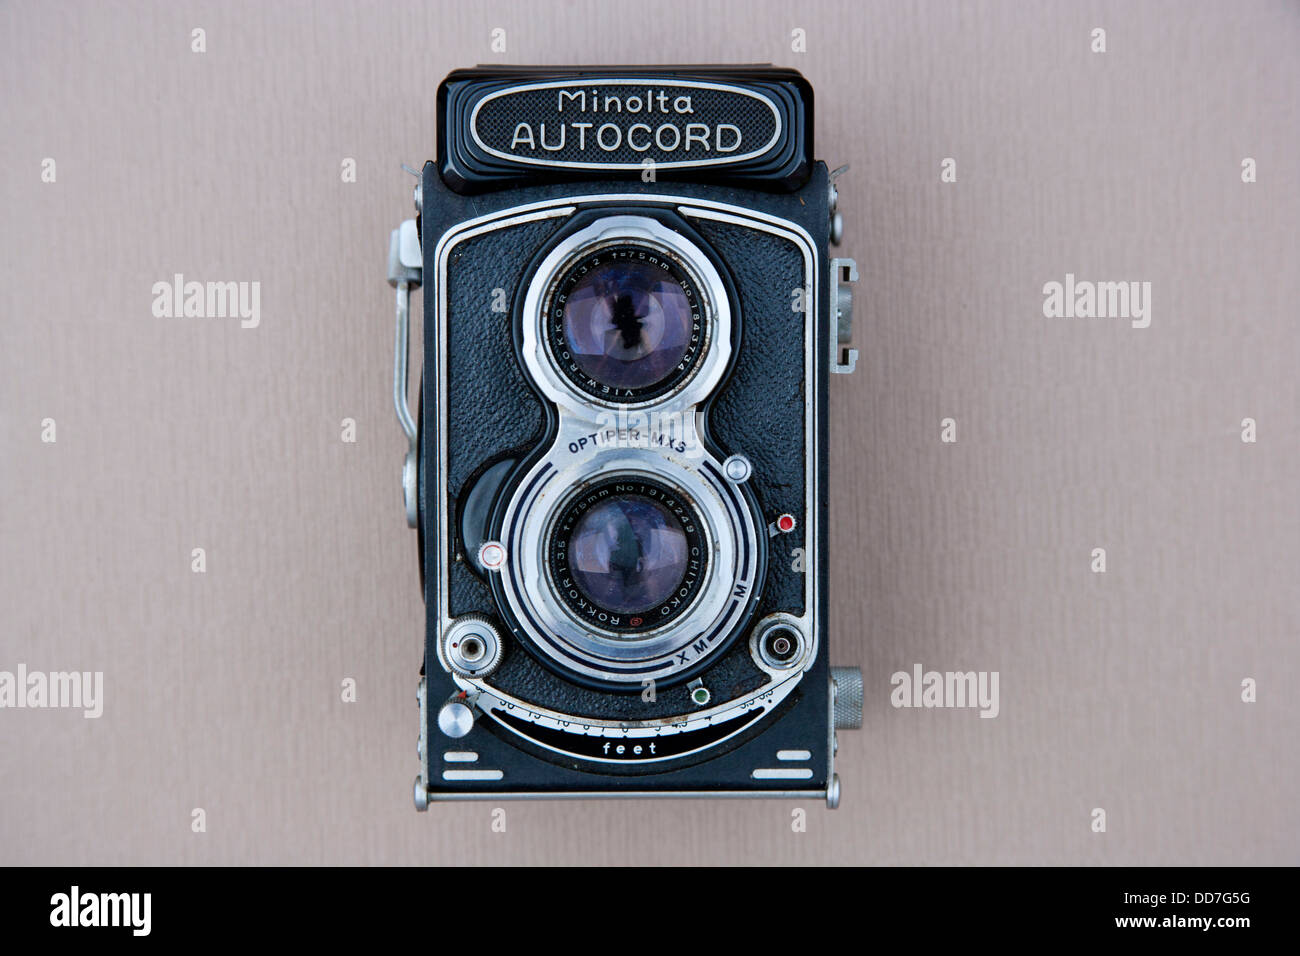 minolta autocord camera Stock Photo - Alamy